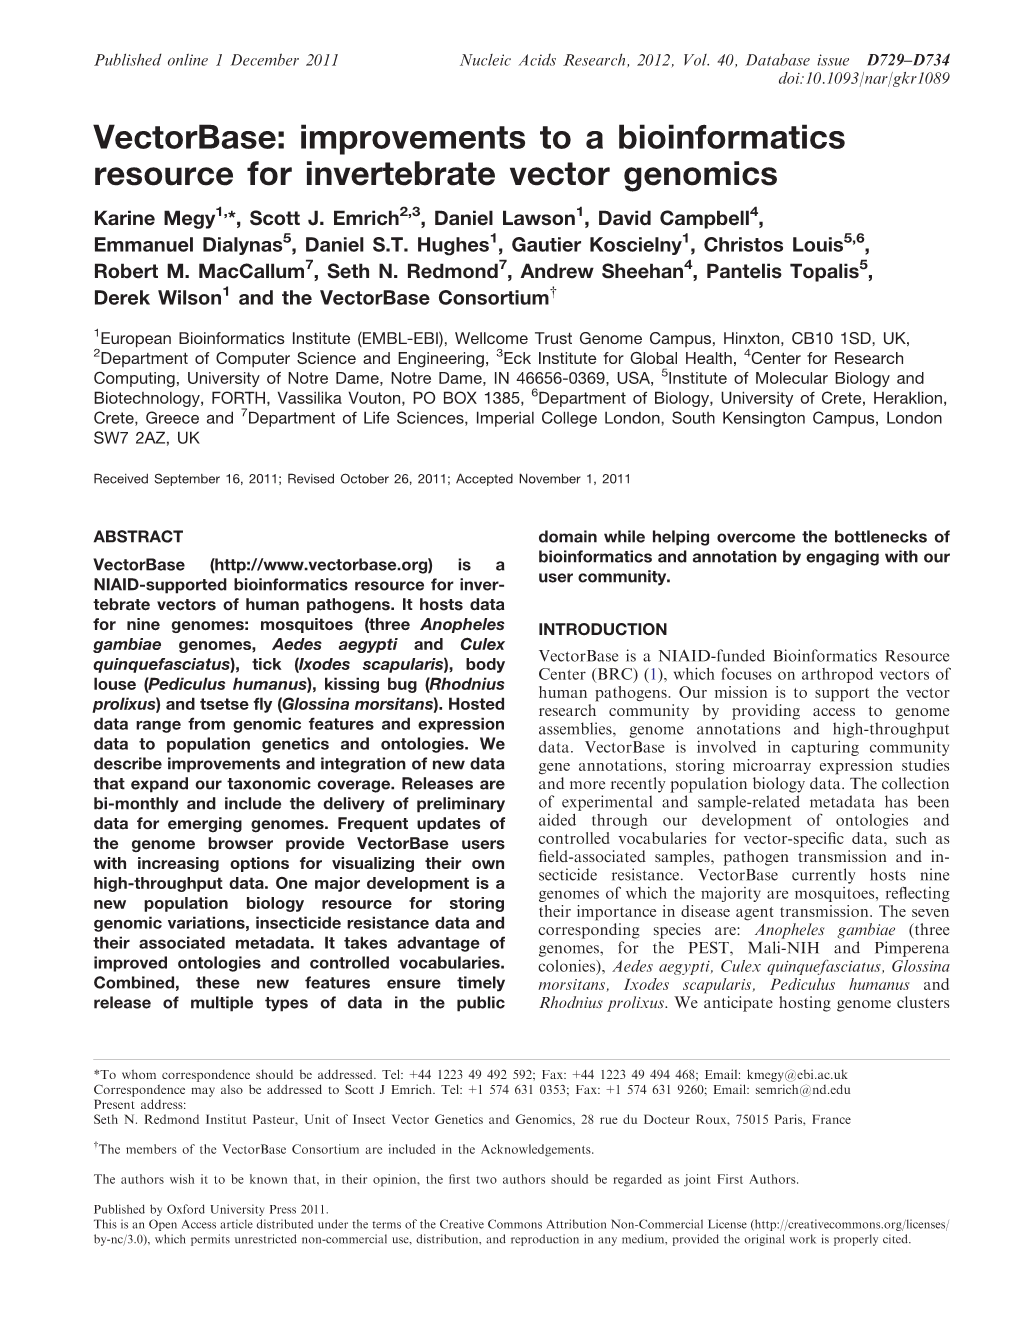 Vectorbase: Improvements to a Bioinformatics Resource for Invertebrate Vector Genomics Karine Megy1,*, Scott J